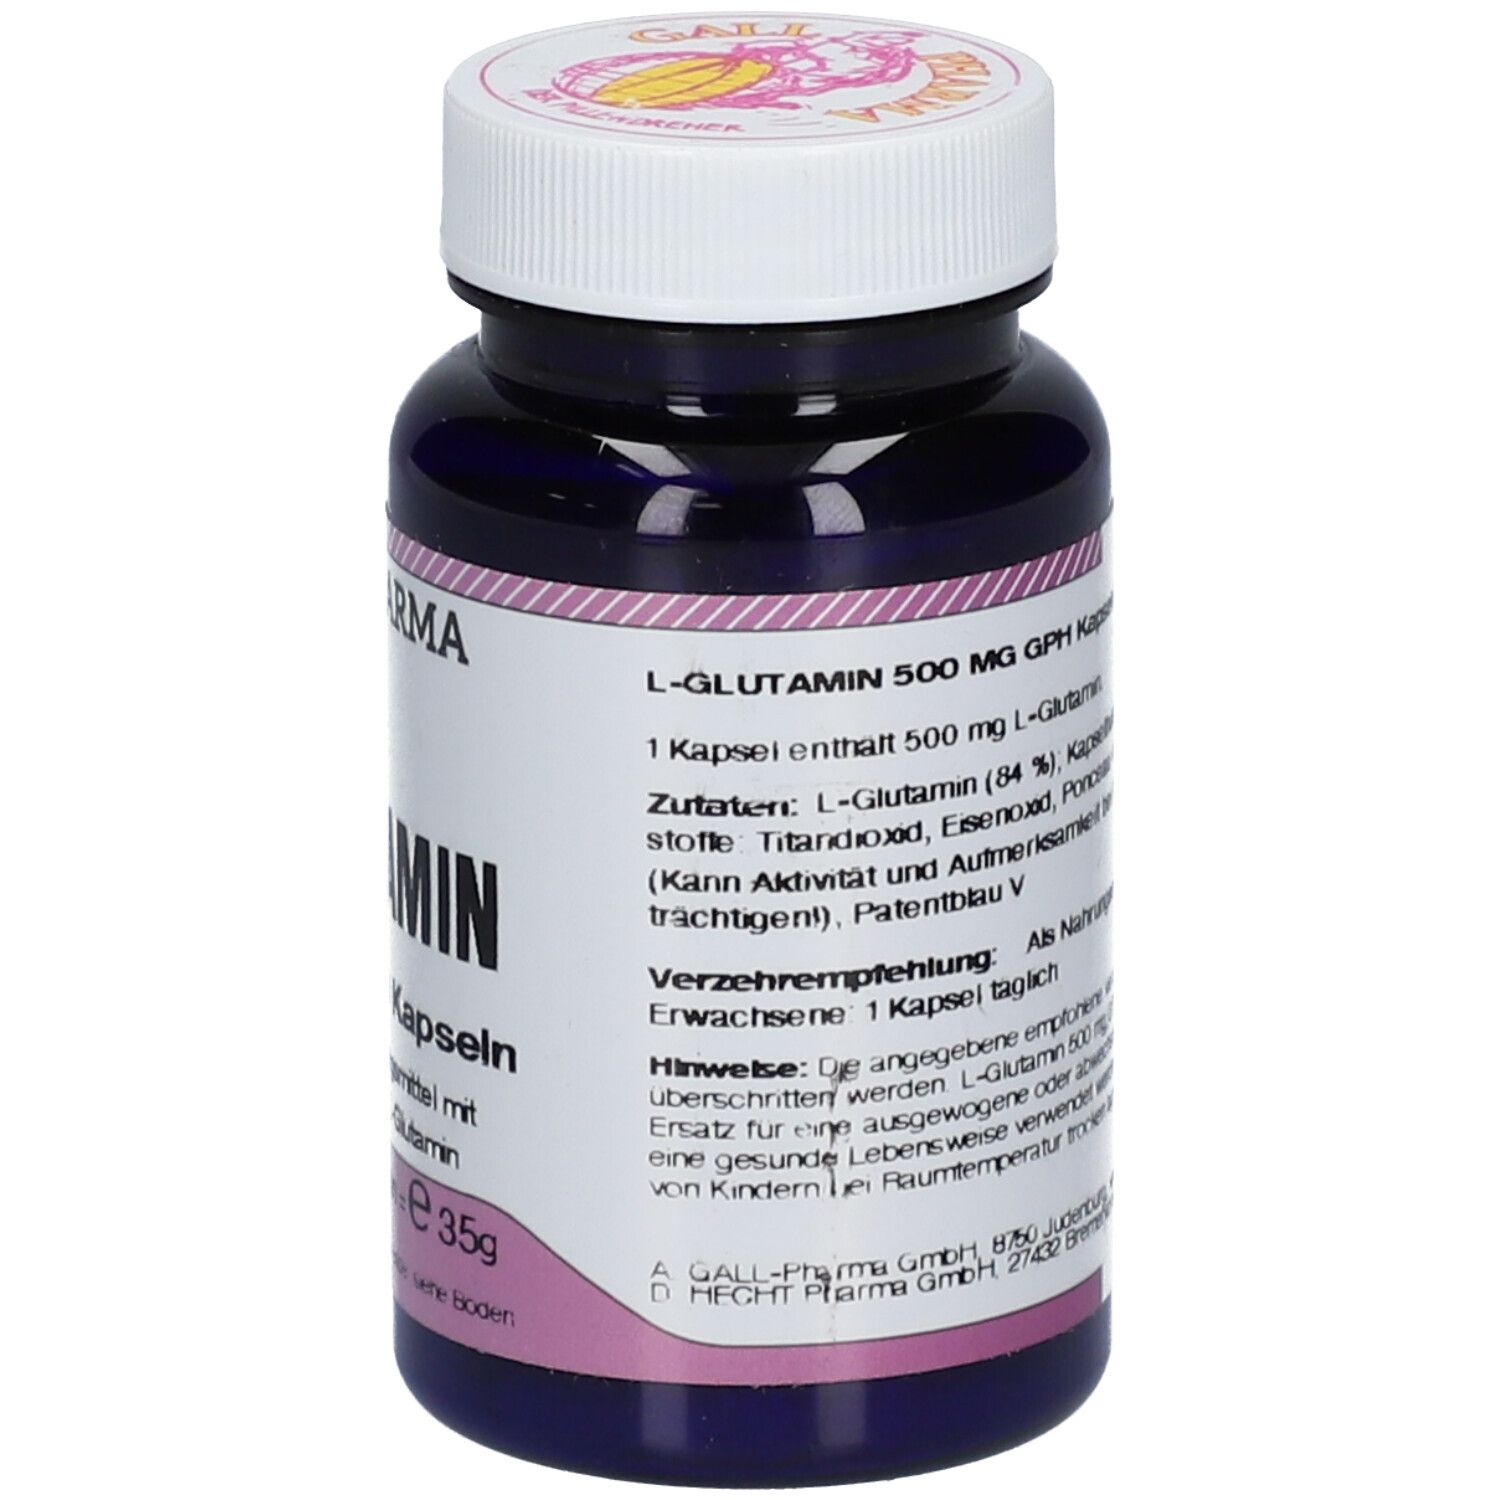 GALL PHARMA L-Glutamin 500 mg GPH Kapseln